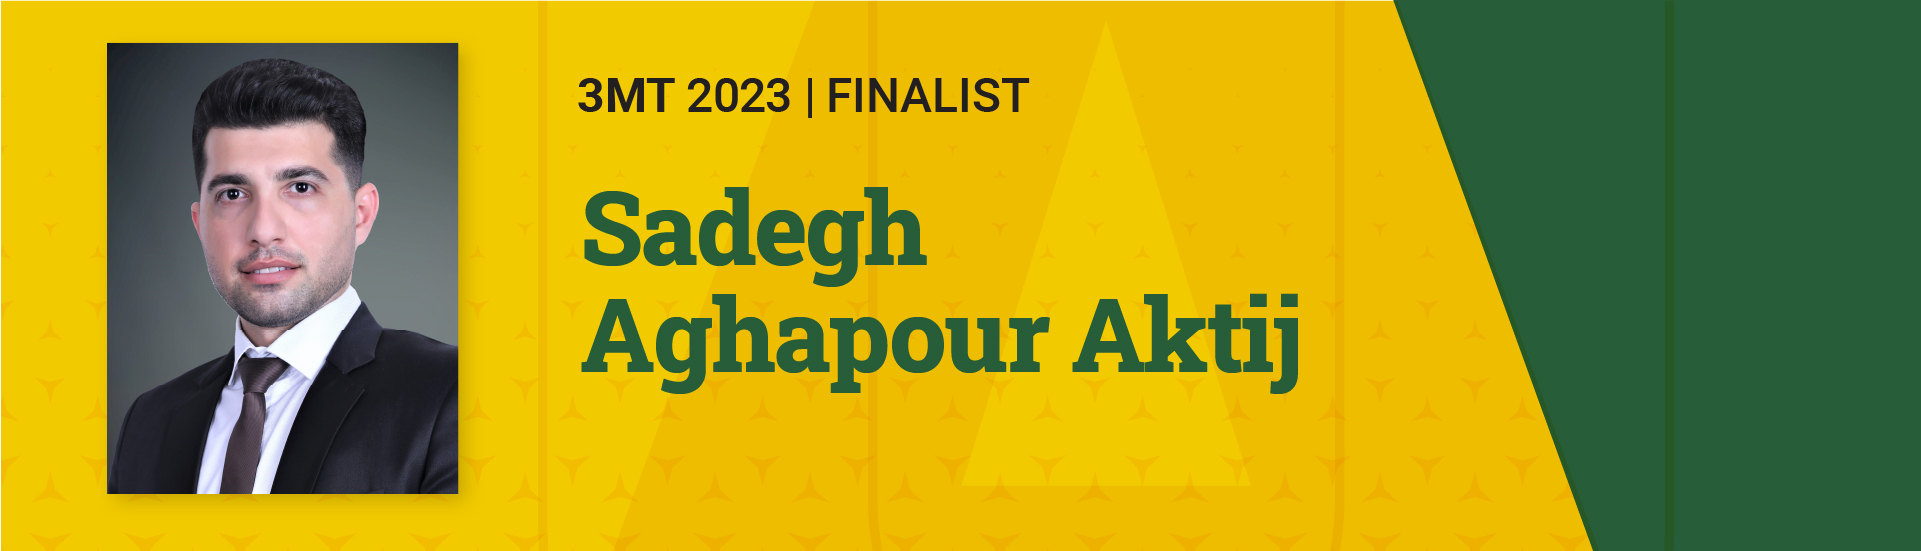 3MT 2023 Finalist  Sadegh Aghapour Aktij 